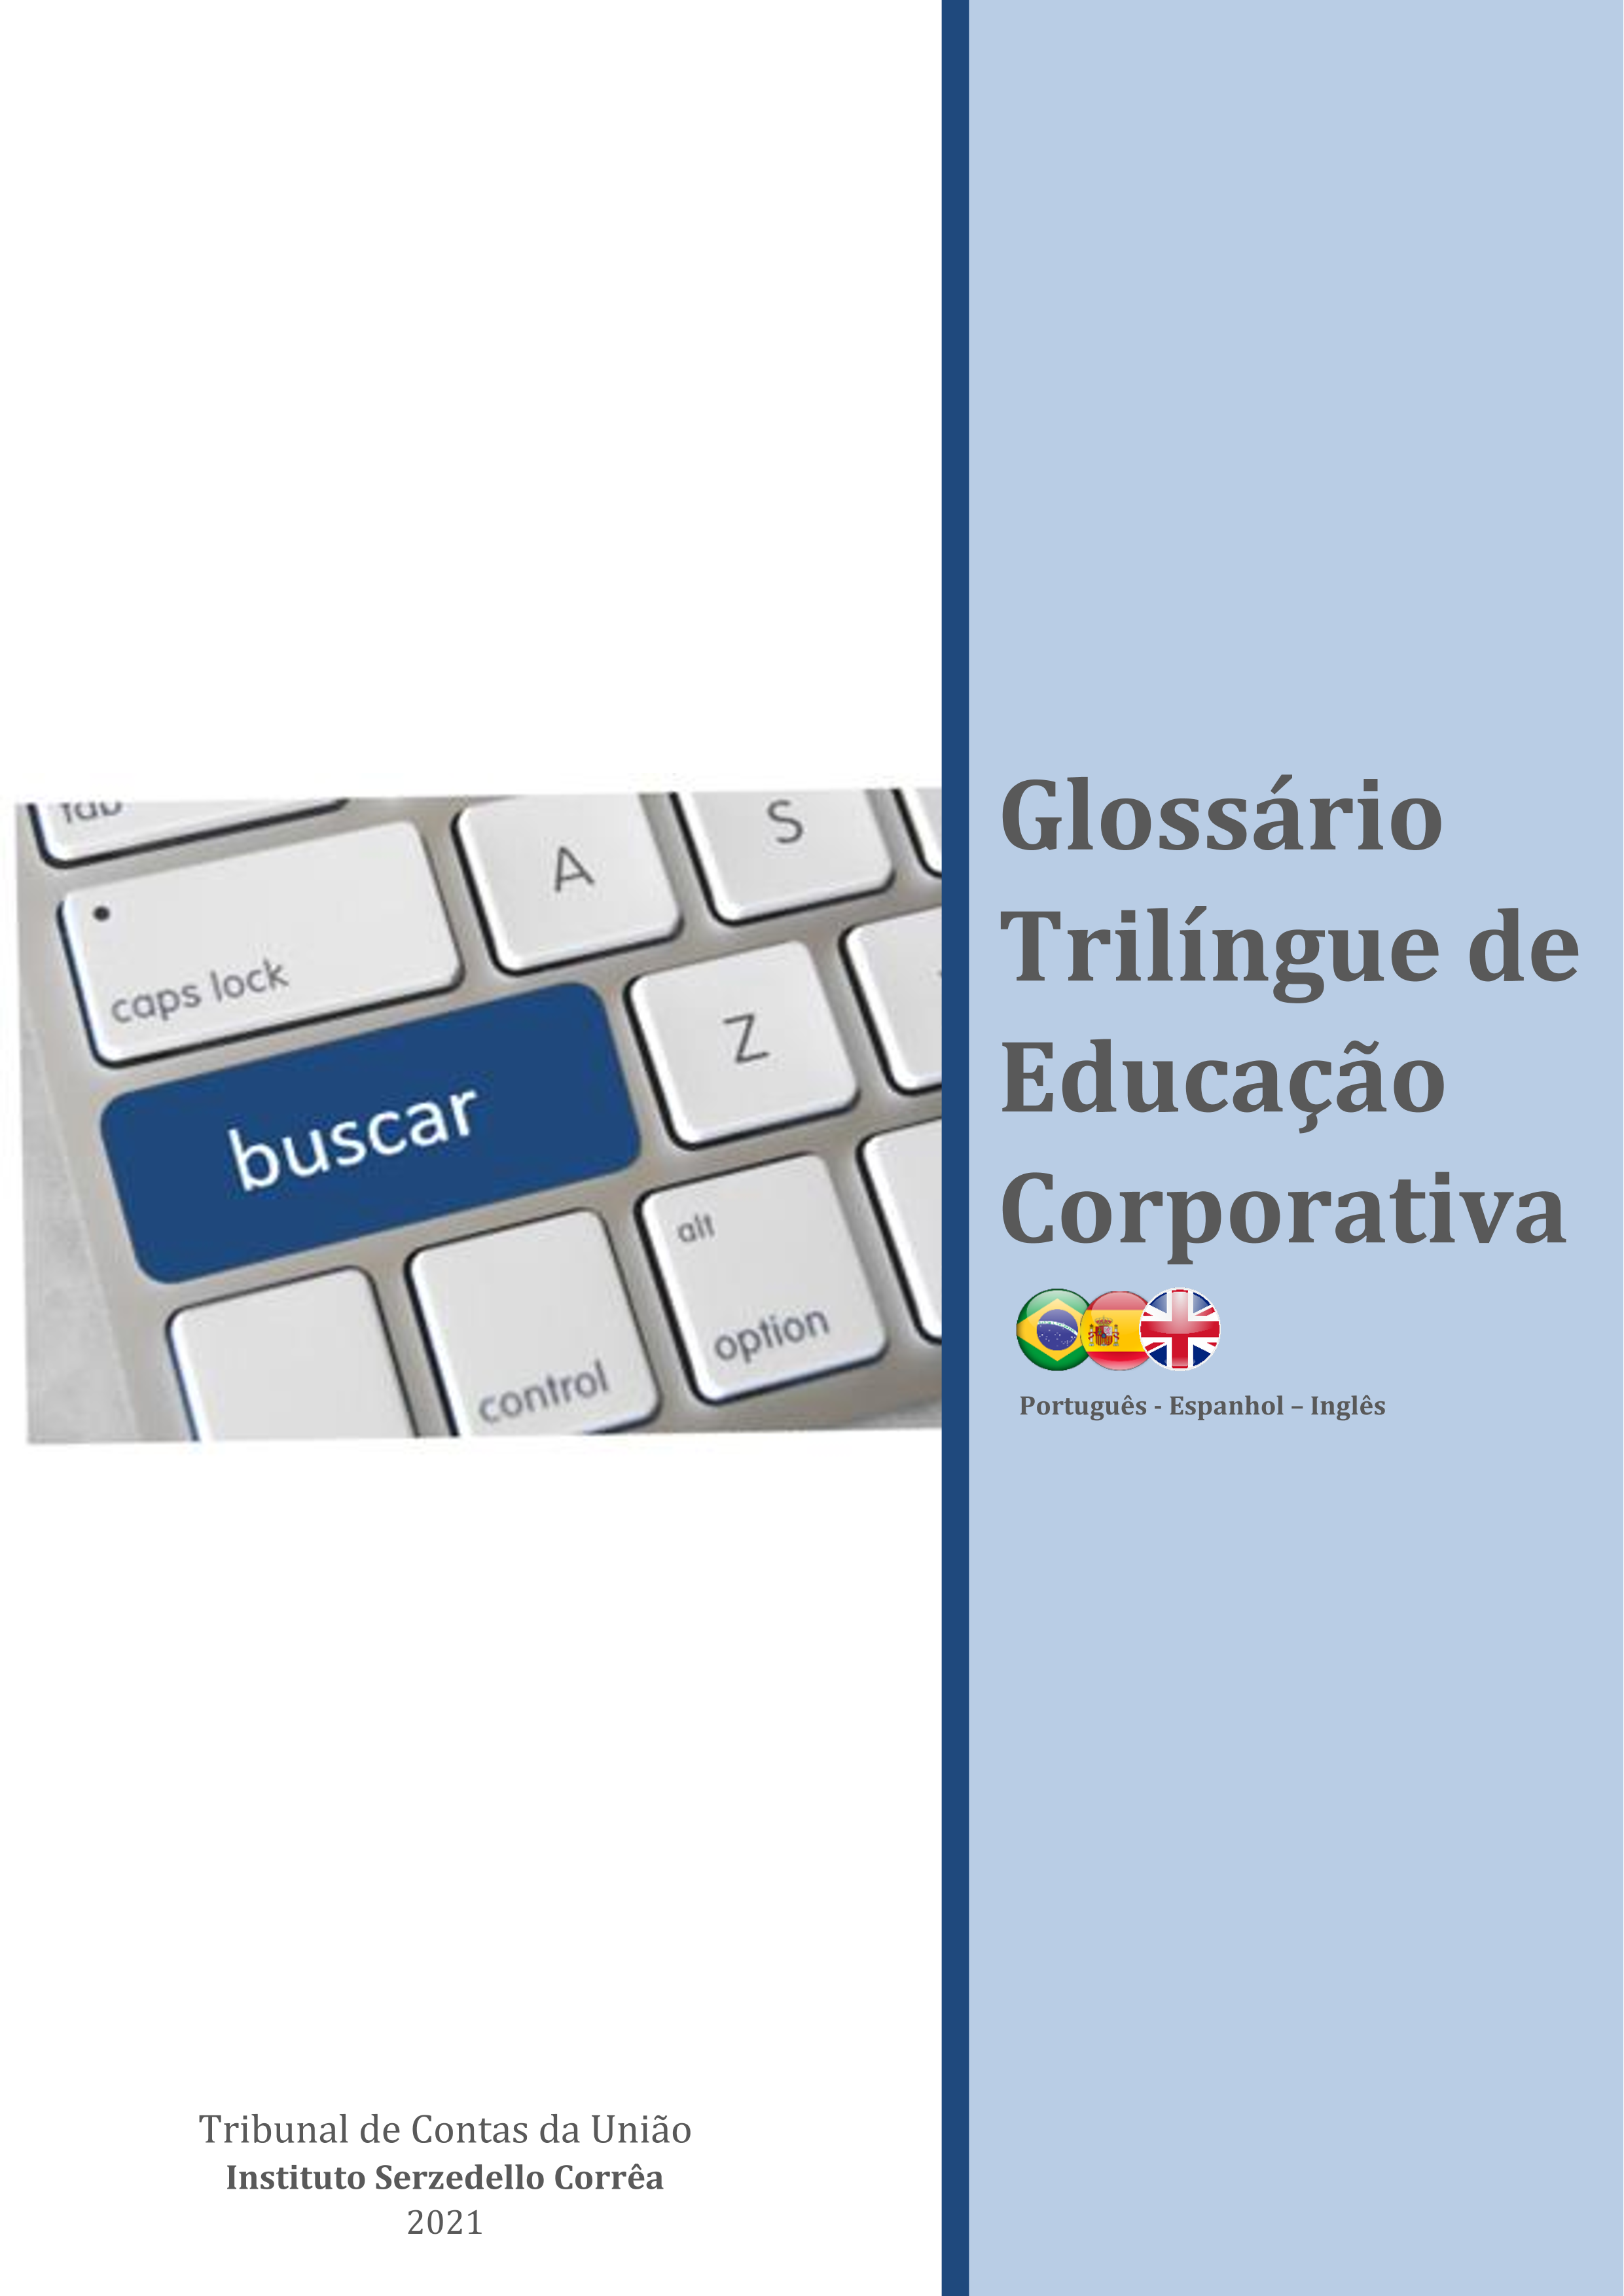 glossario-trilingue- educacao-corporativa.png